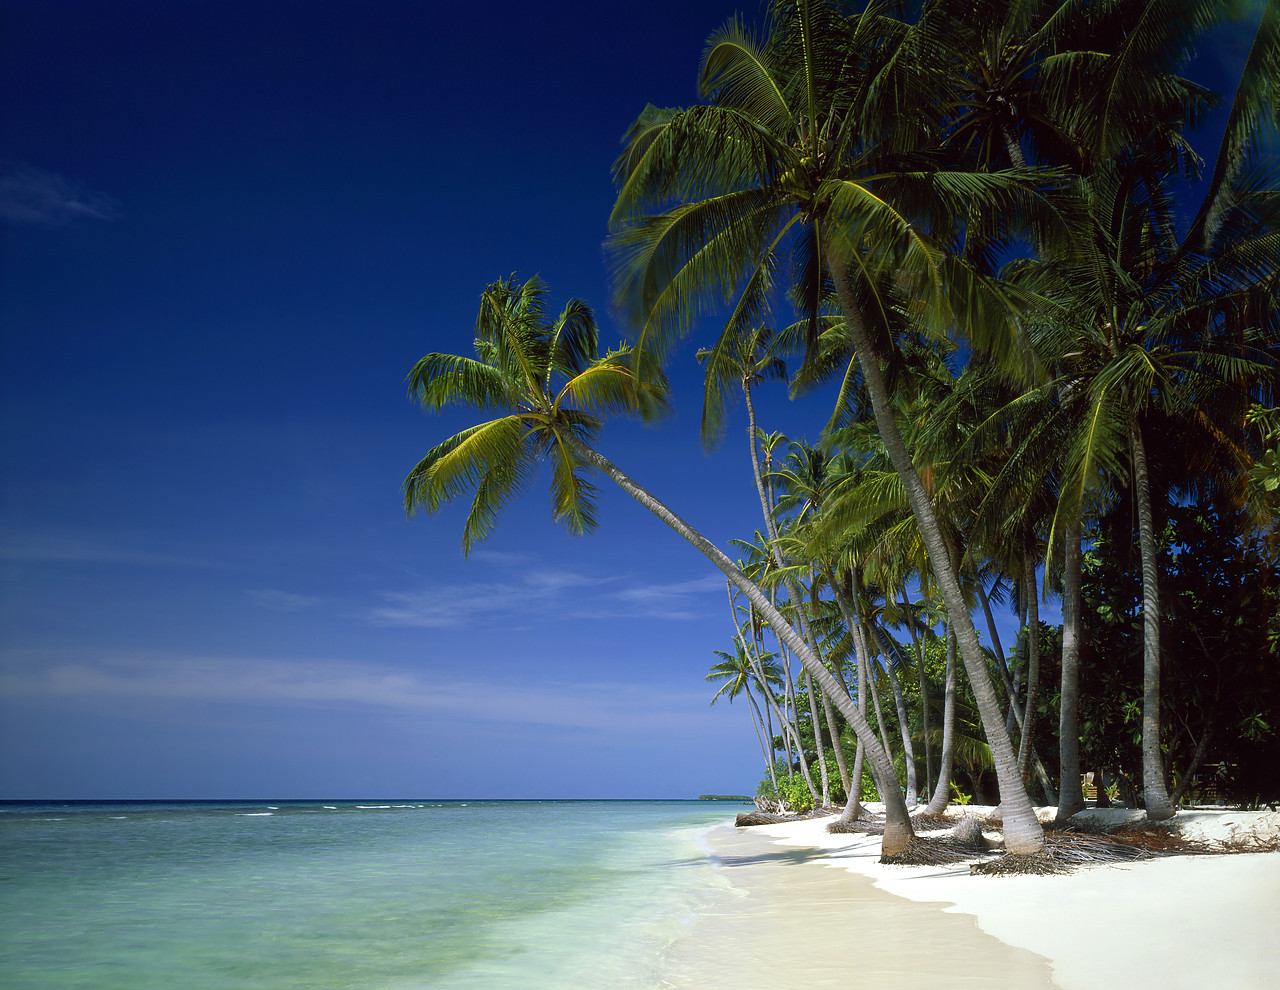 #080041-1 - Deserted Palm Fringed Beach, Kuredu, Maldives